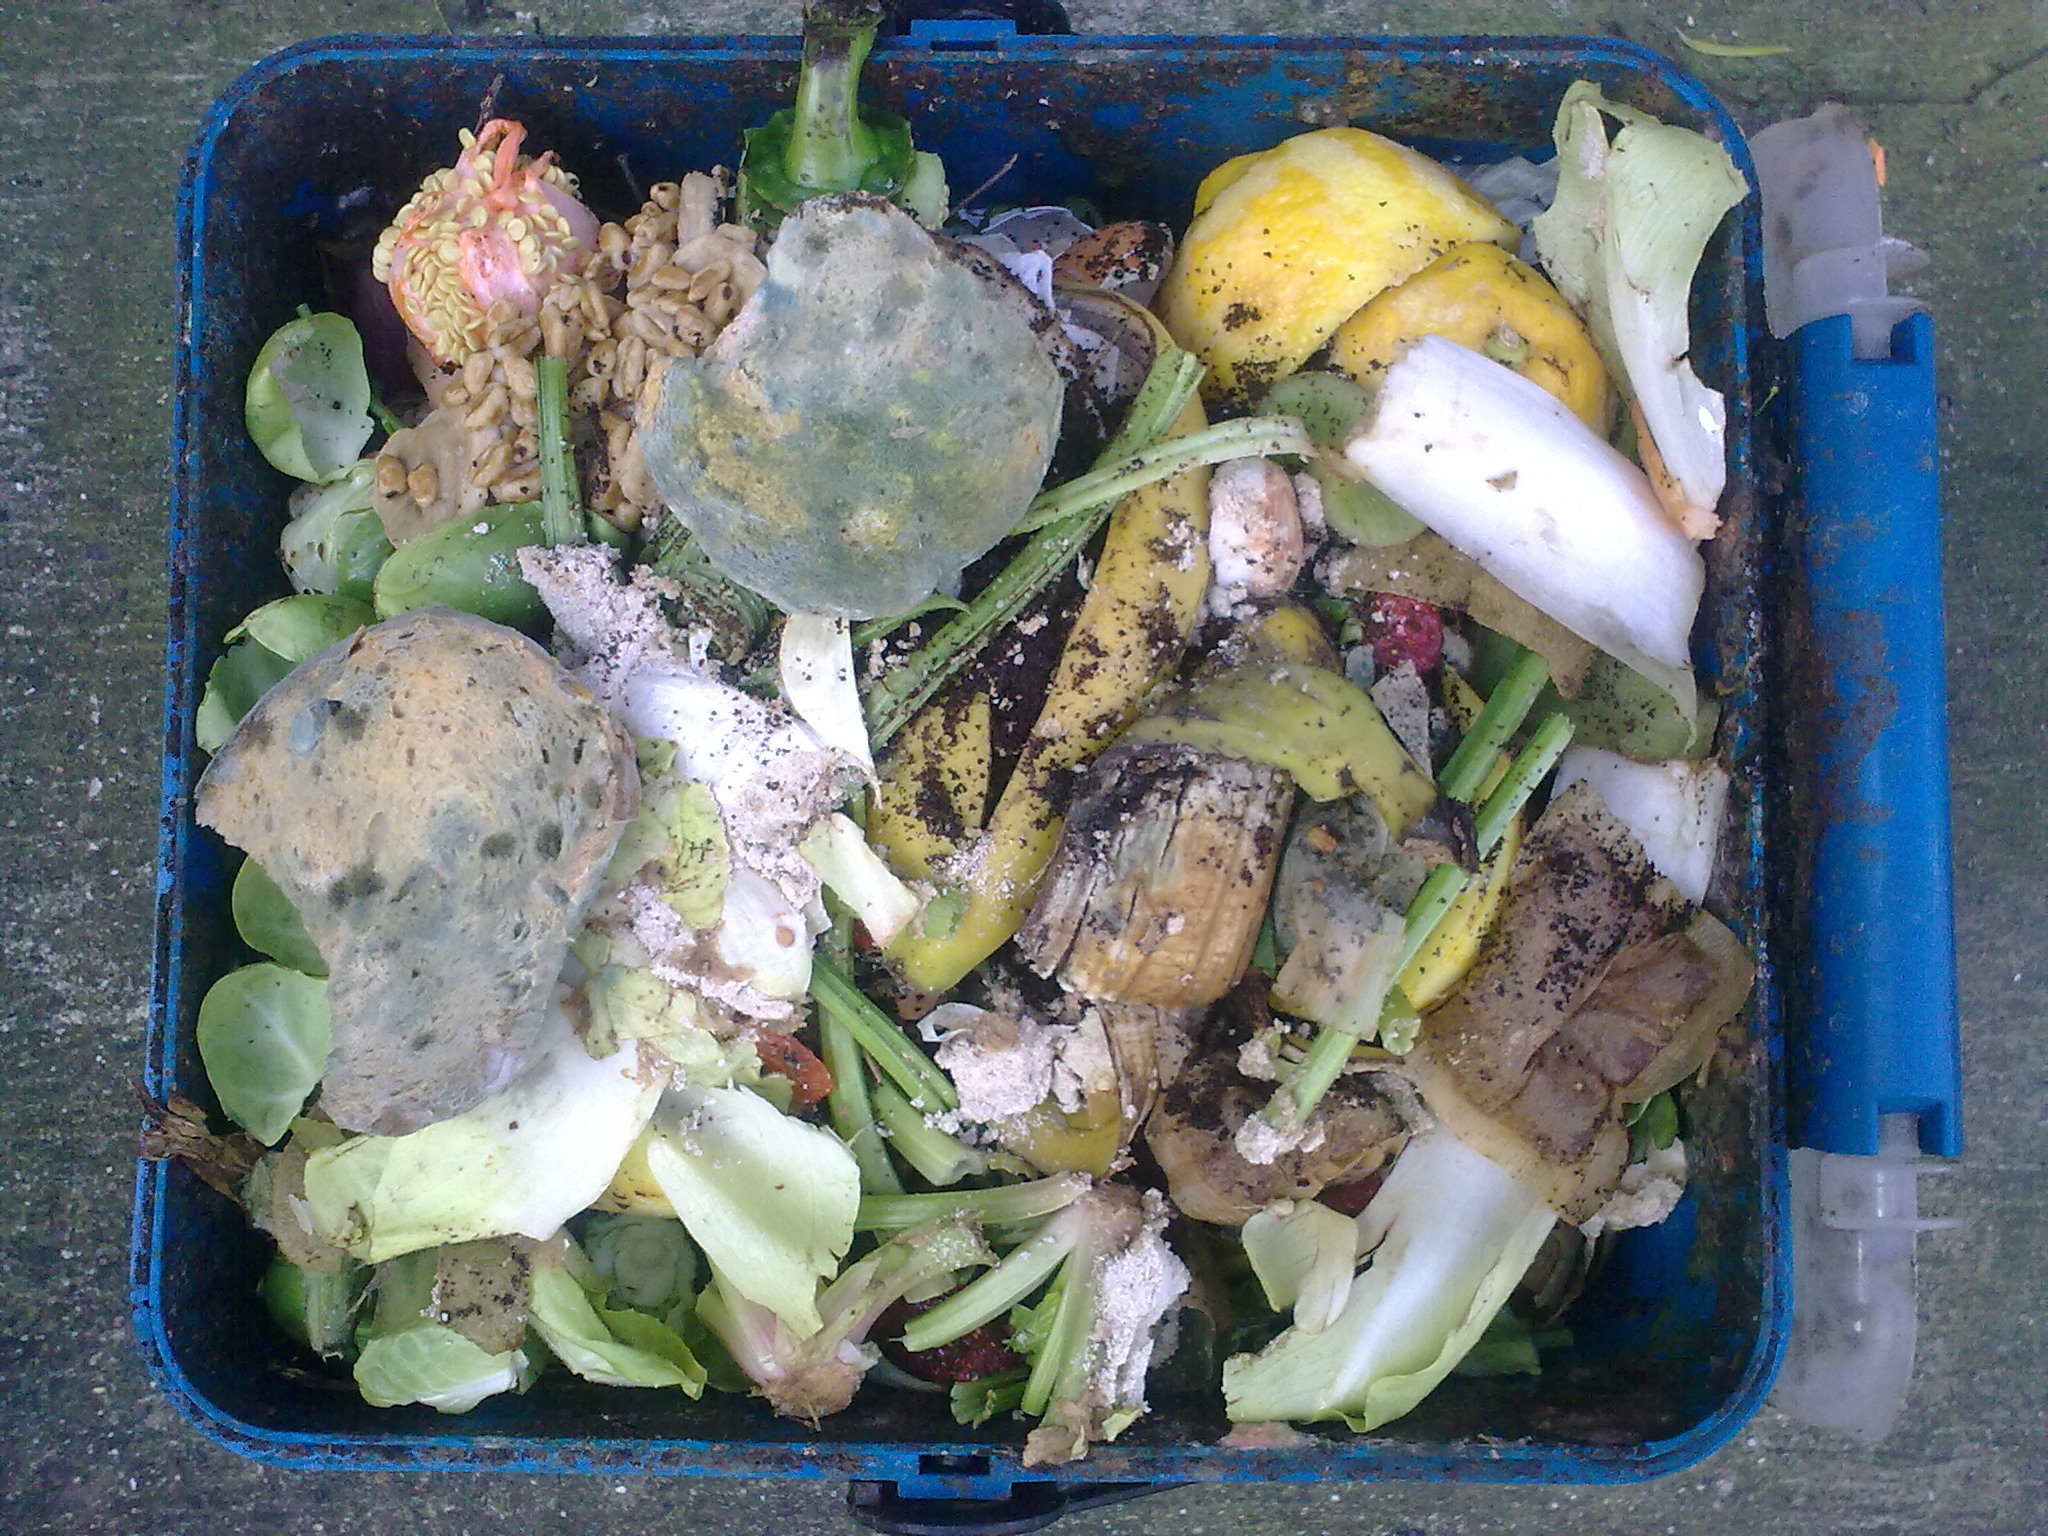 Lebensmittel/Kompost im Abfall